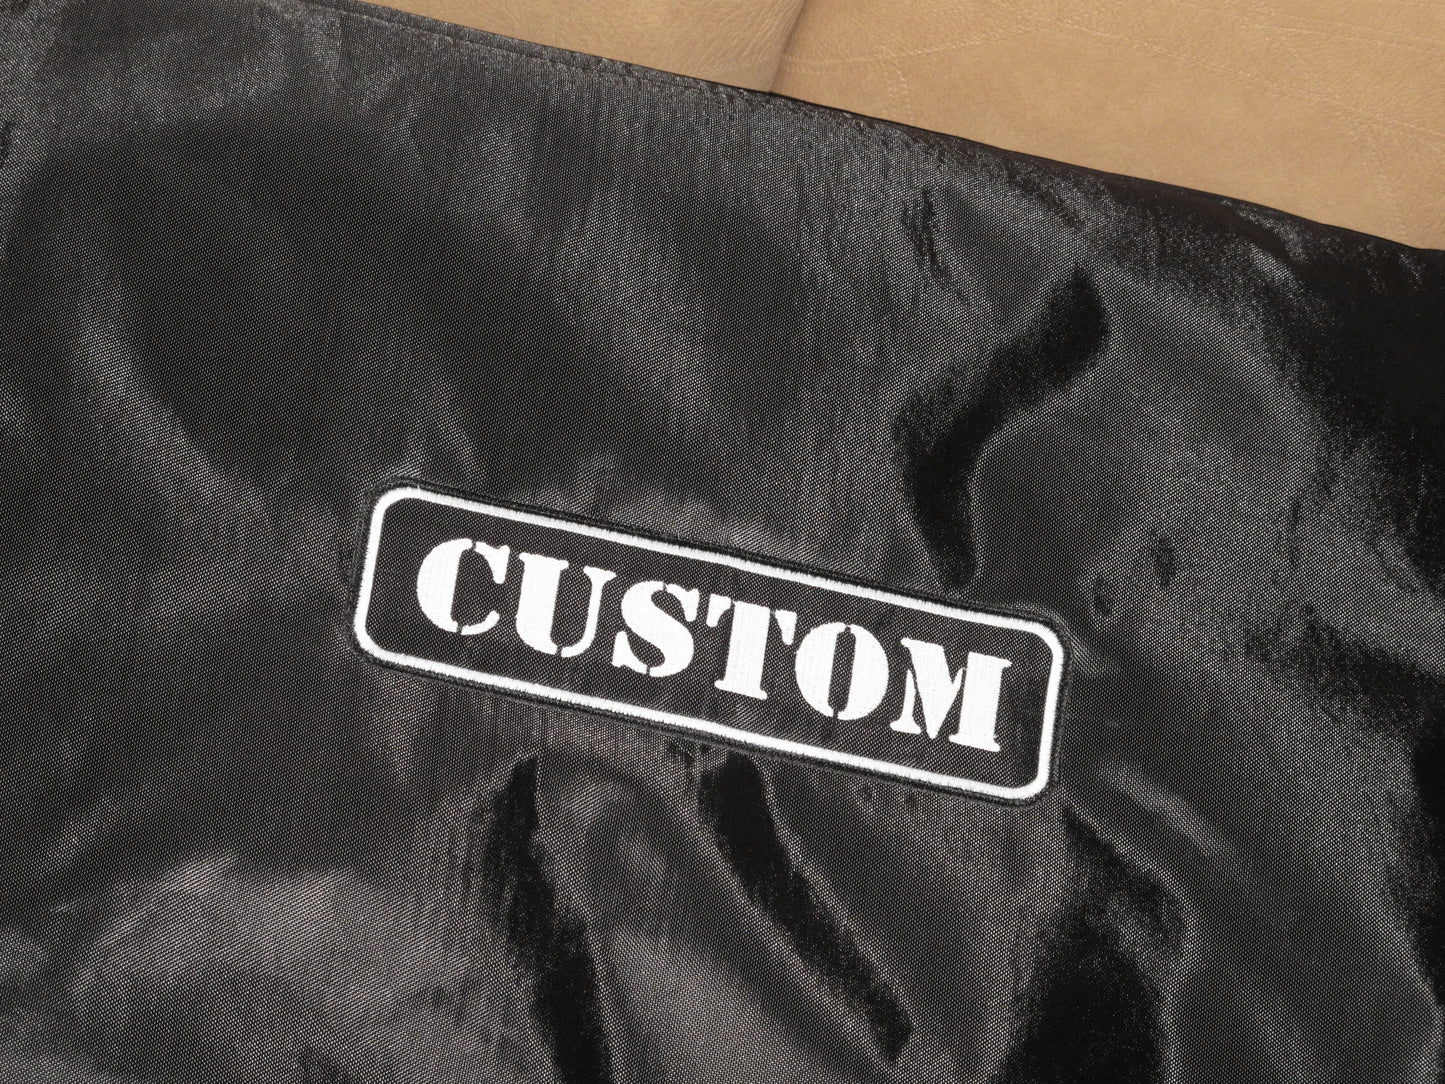 Custom handmade high quality padded cover for ENGL Sovereign 1x12" E365 combo amp embroidered logo black white